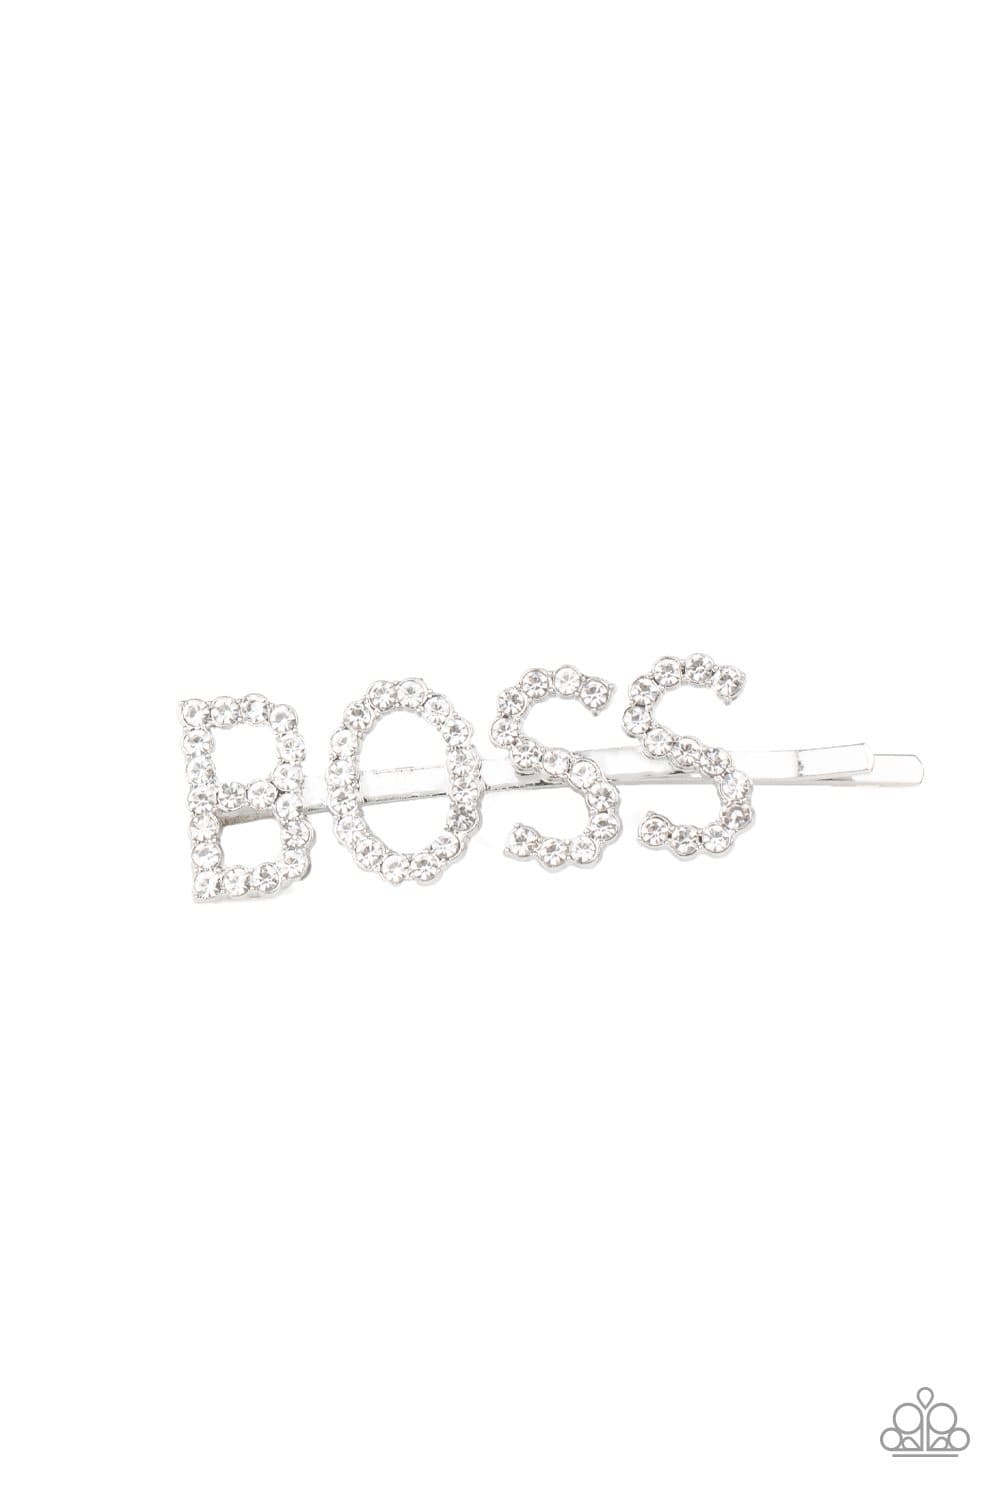 Paparazzi: Yas Boss! - White Bobby Pin - Jewels N’ Thingz Boutique